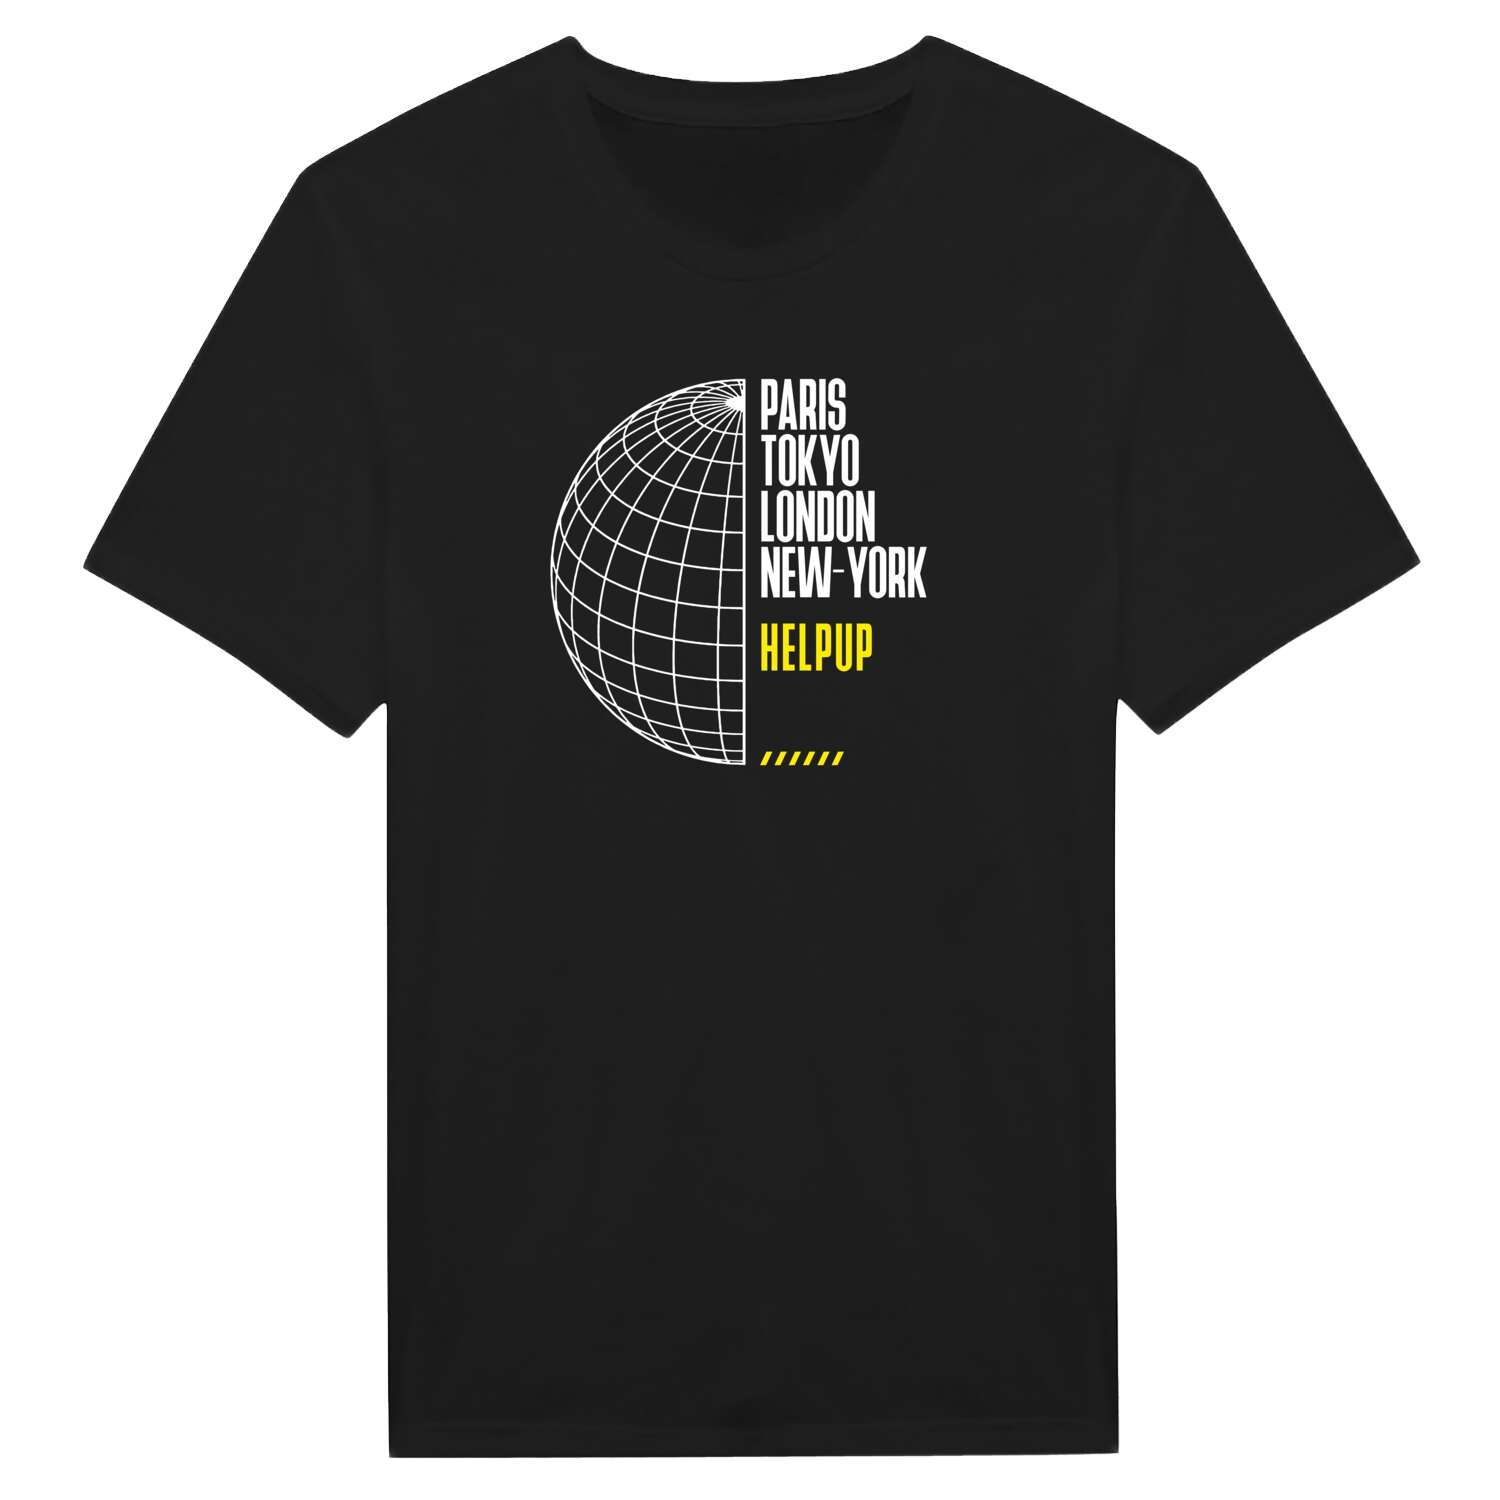 Helpup T-Shirt »Paris Tokyo London«